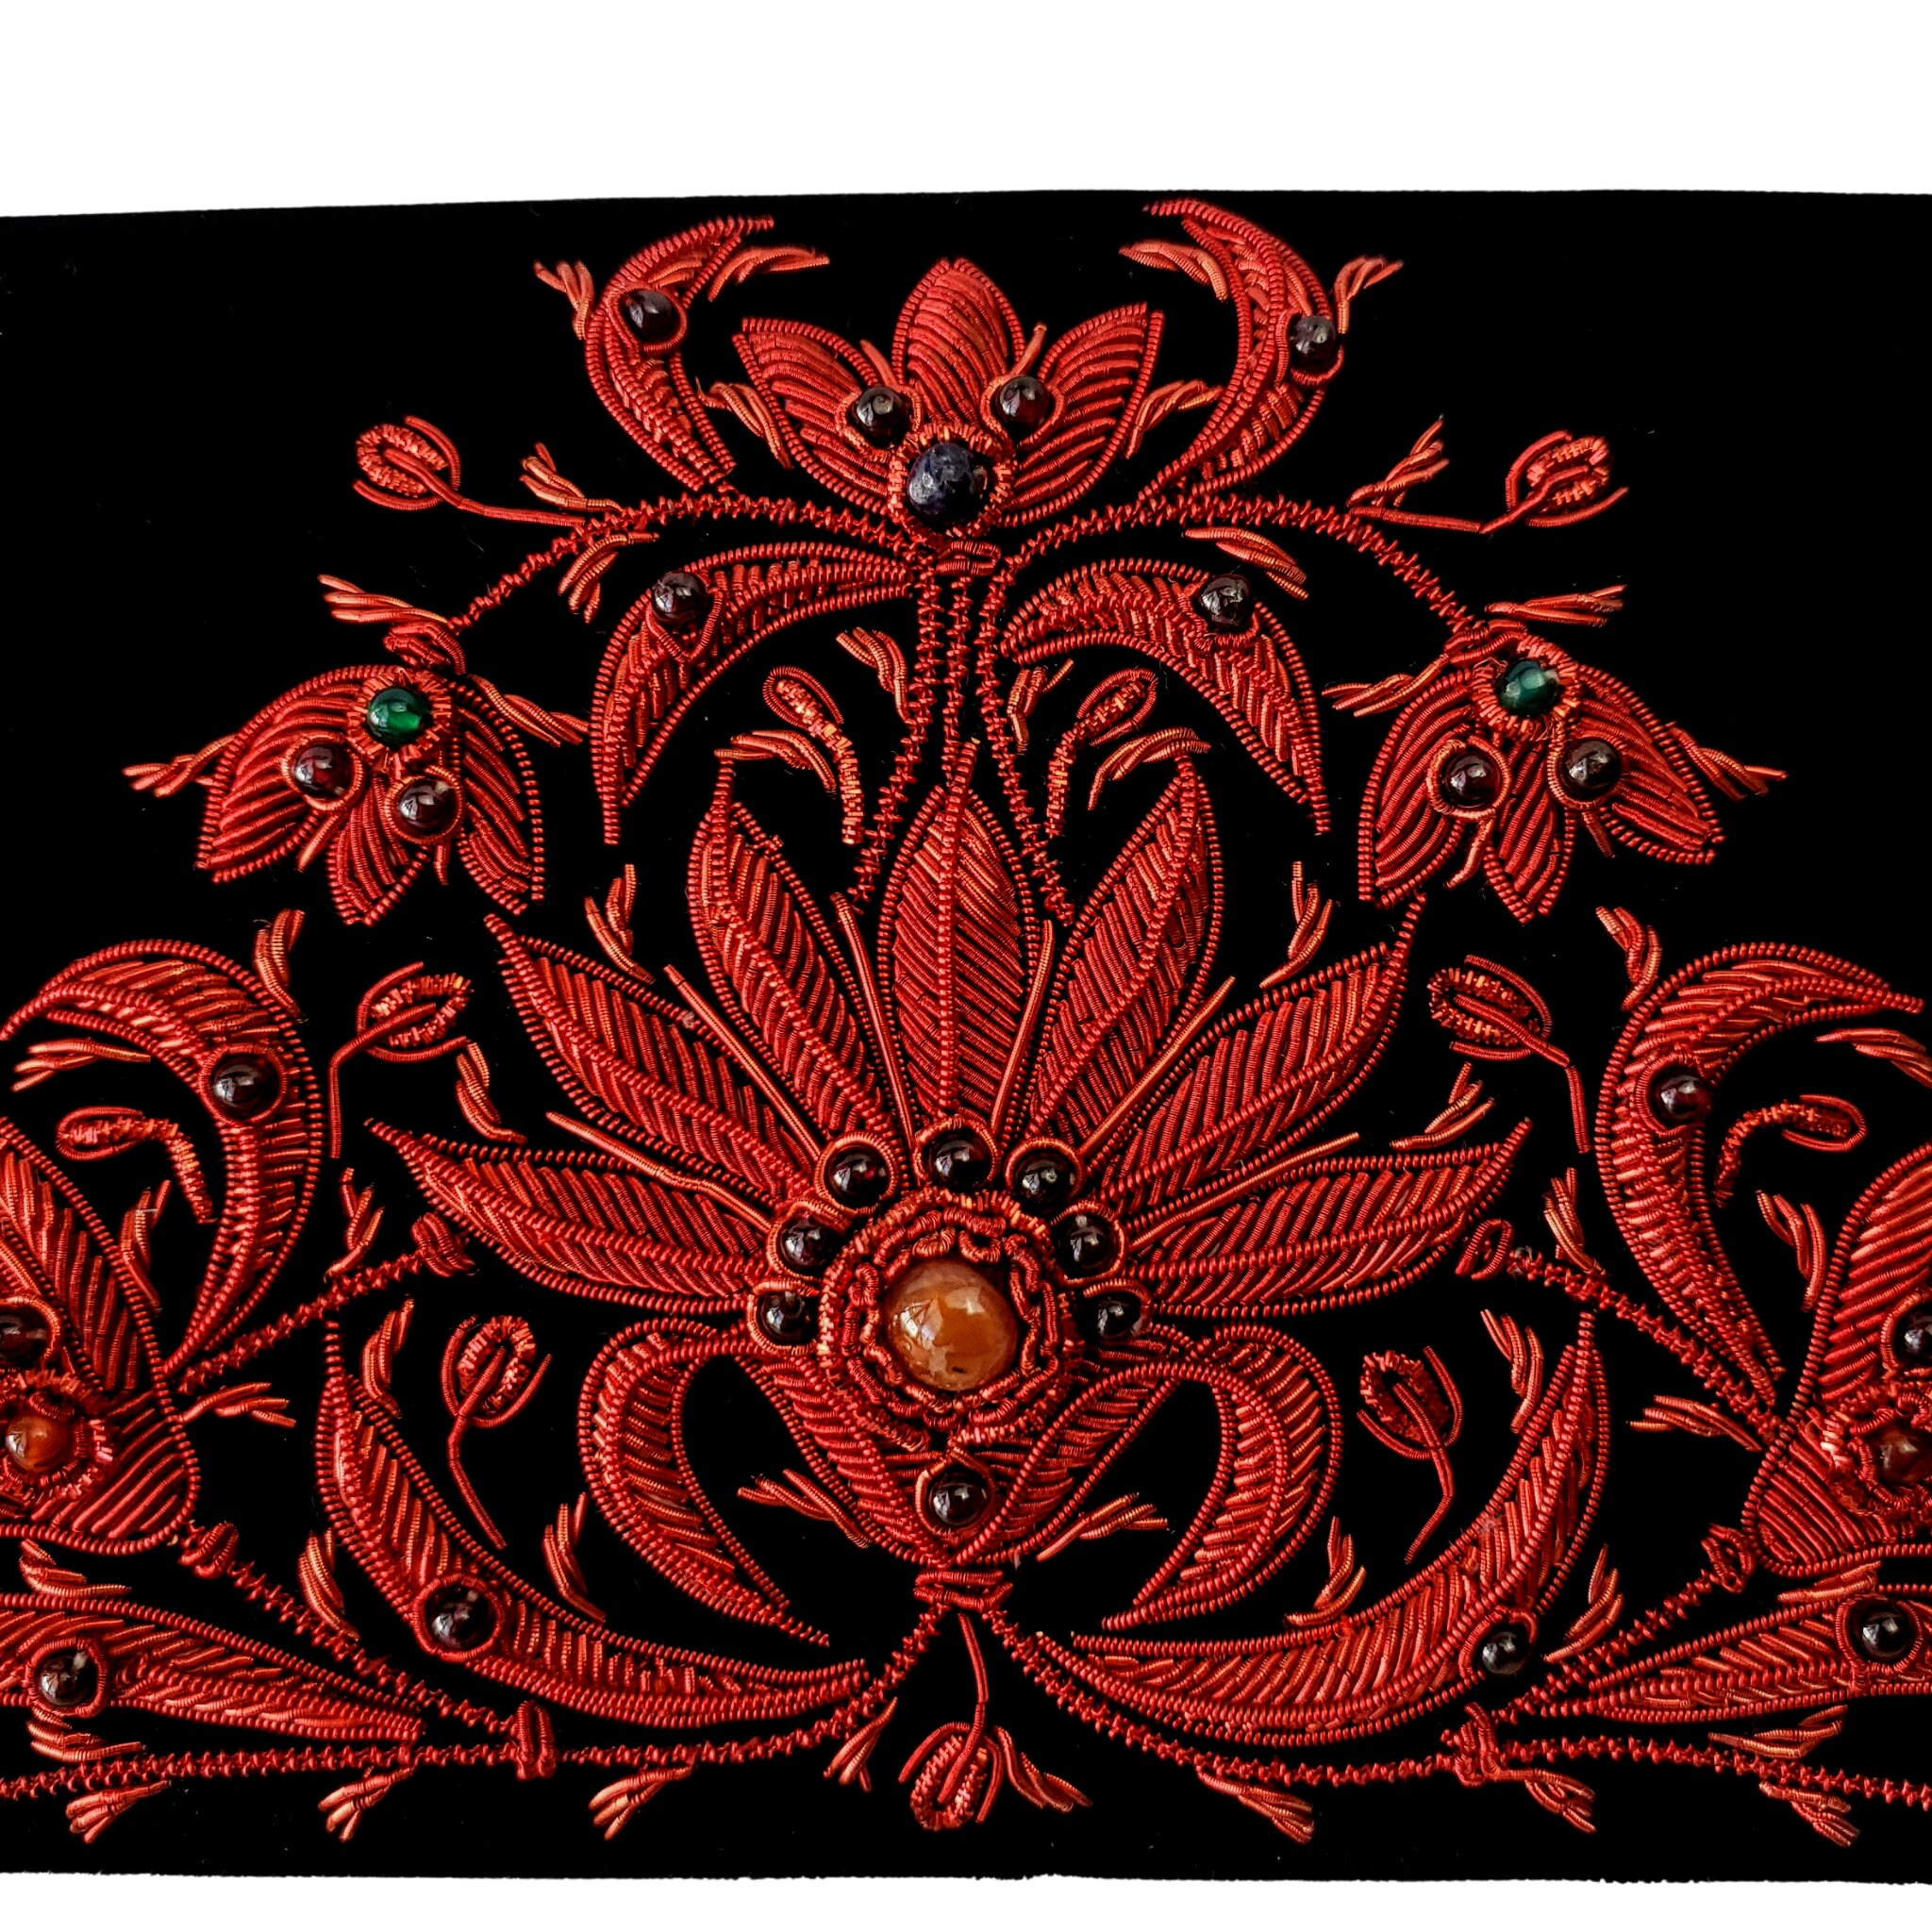 Luxury ivory velvet clutch bag hand embroidered with red flowers, designer  evening clutch bag,OOAK floral handbag,wedding clutch,party purse